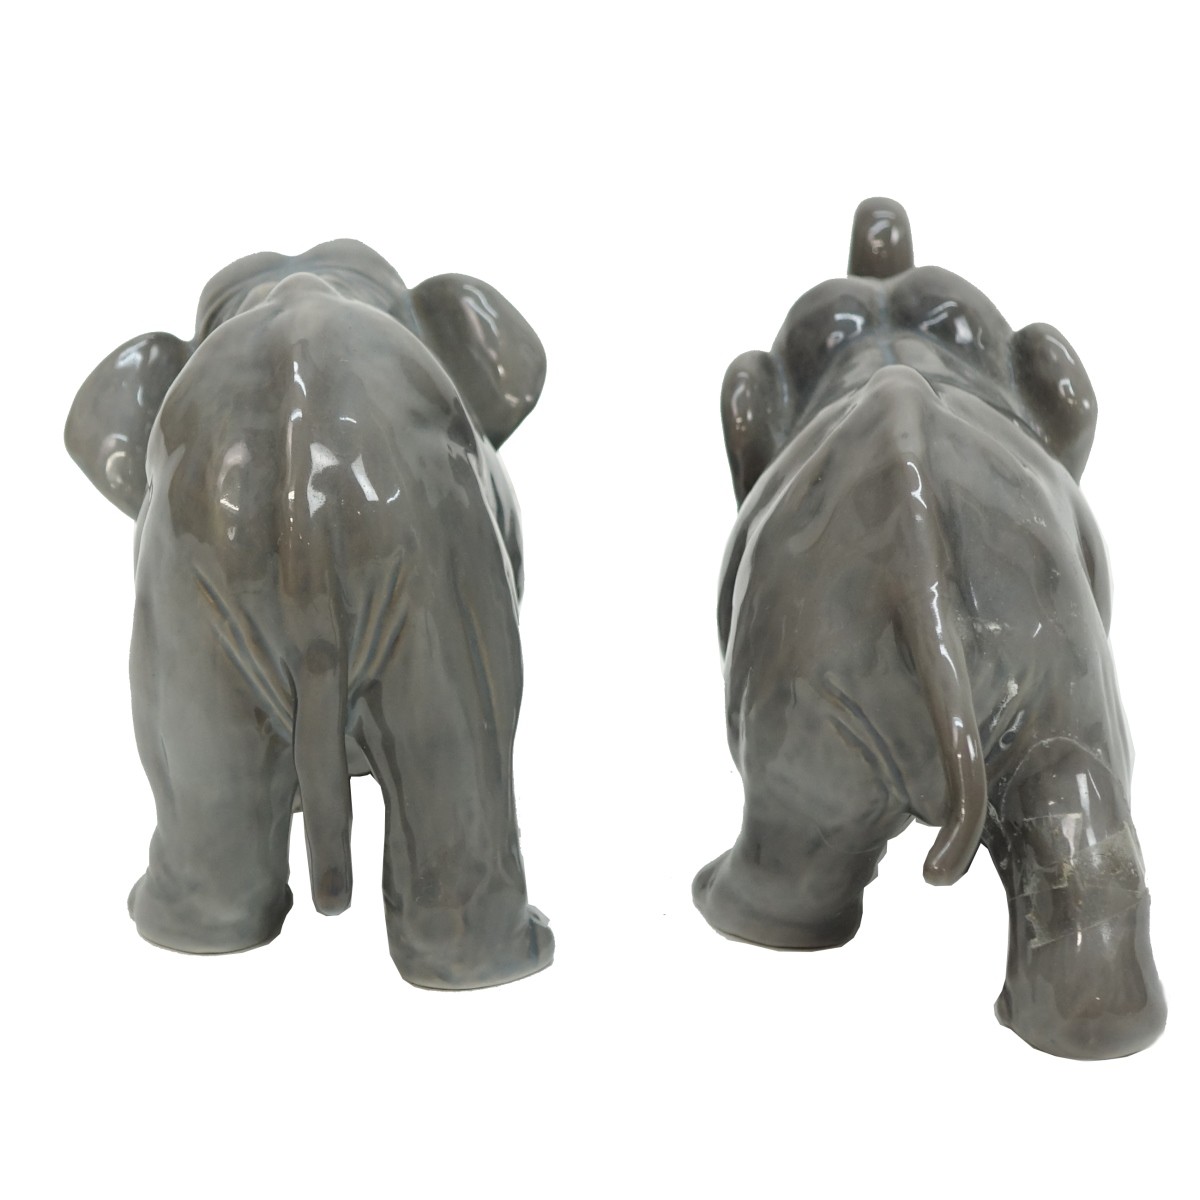 Two (2) Bing & Grondahl Porcelain Elephants